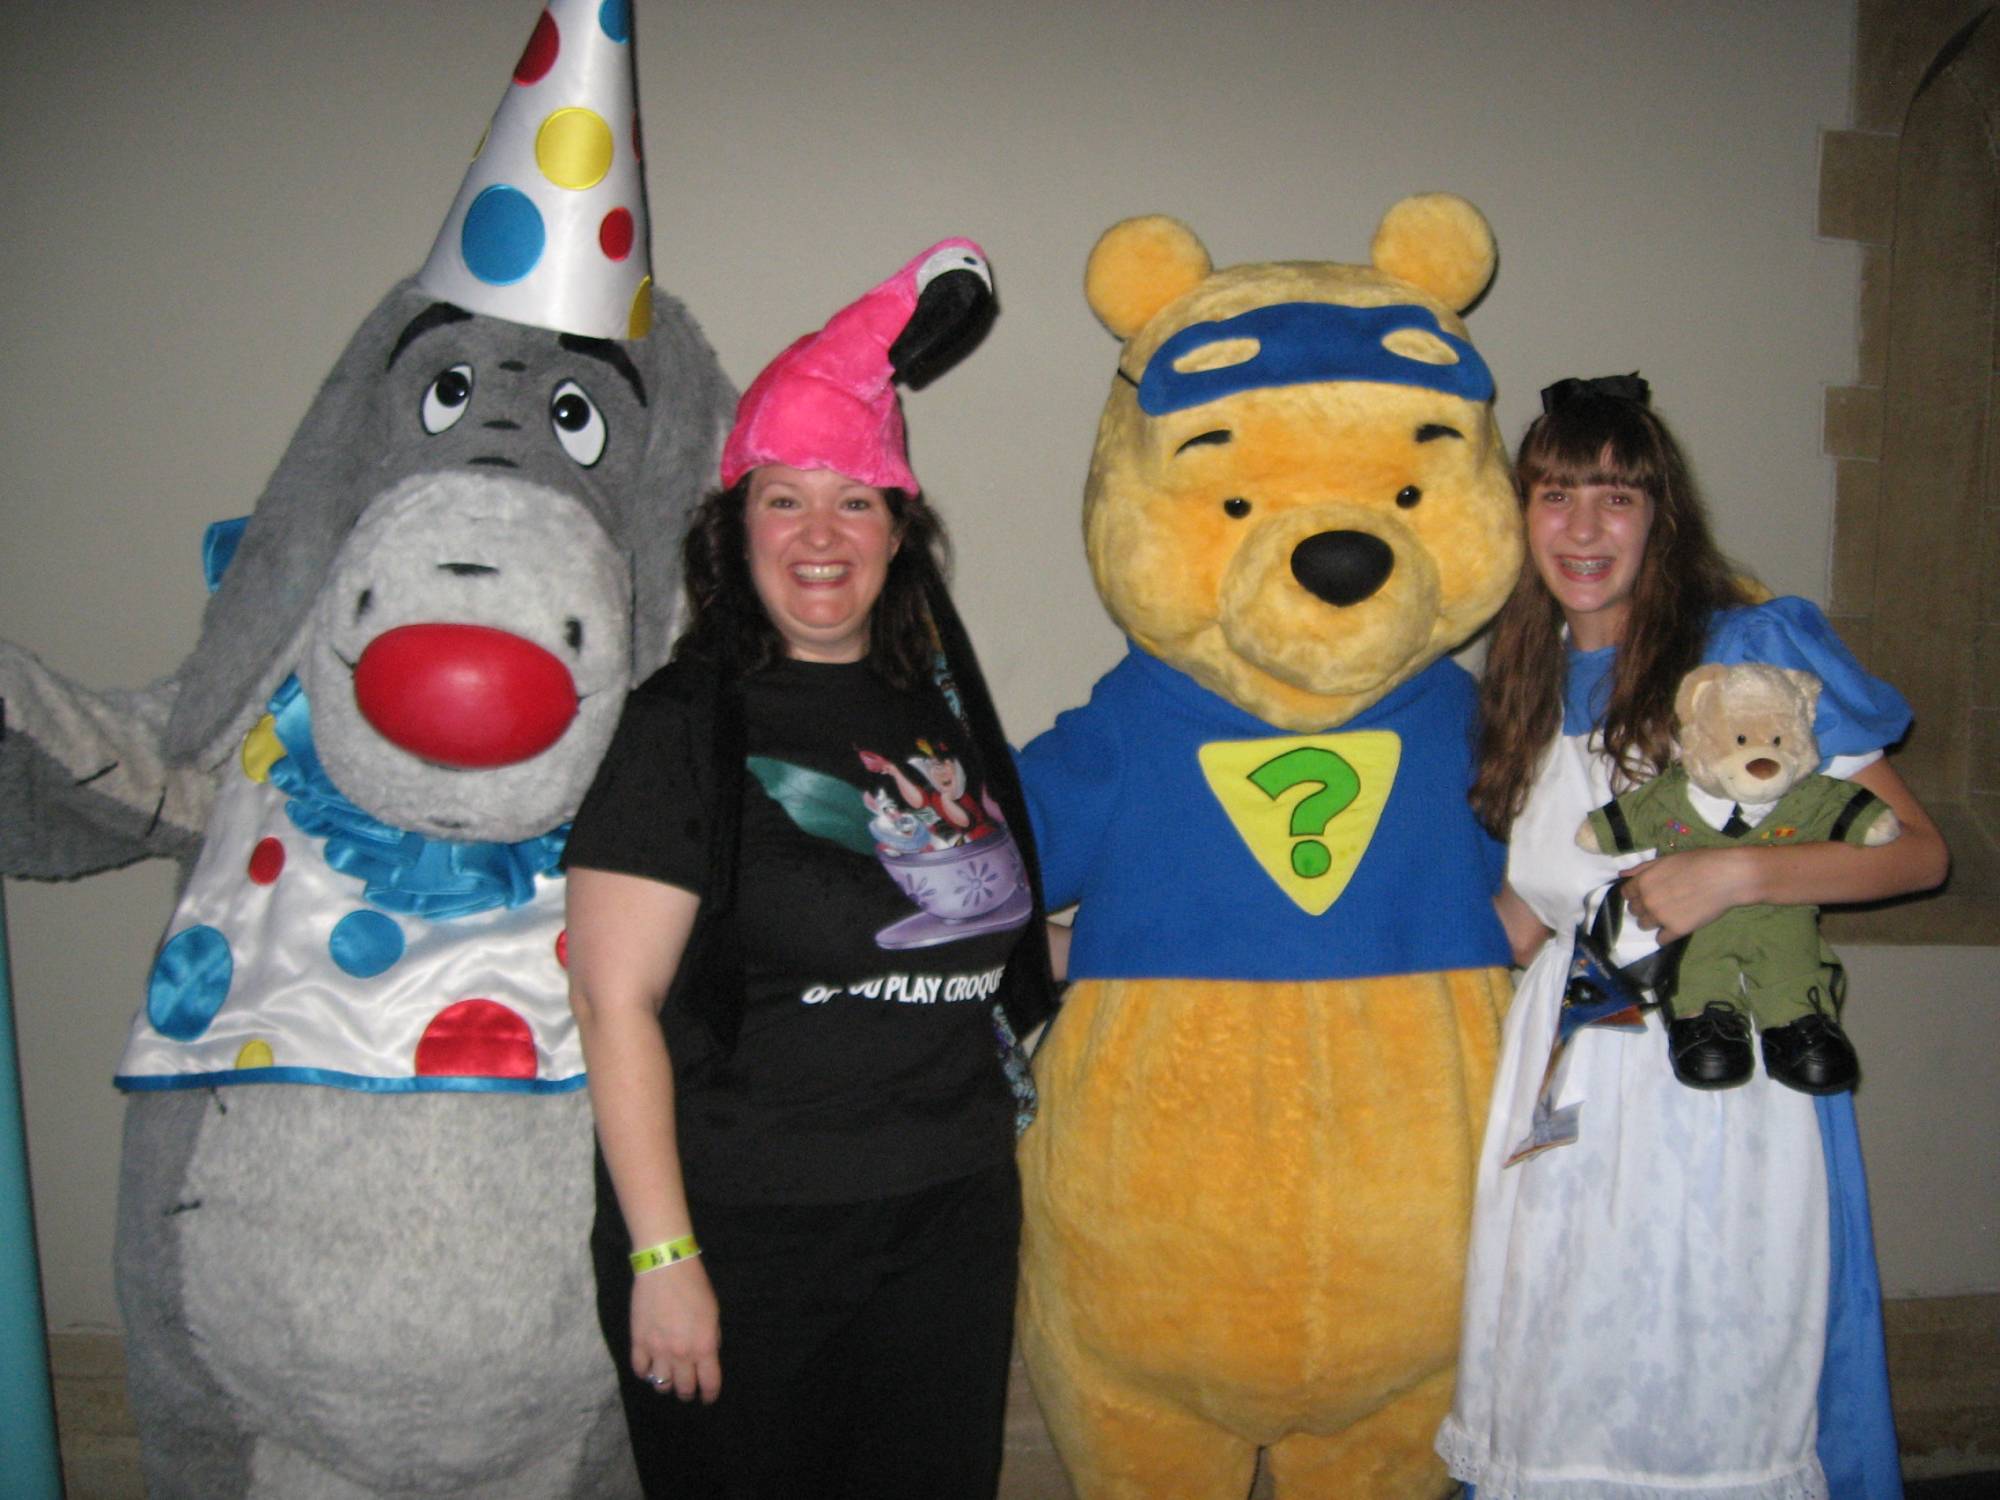 Magic Kingdom - Eeyore and Pooh dressed for Halloween